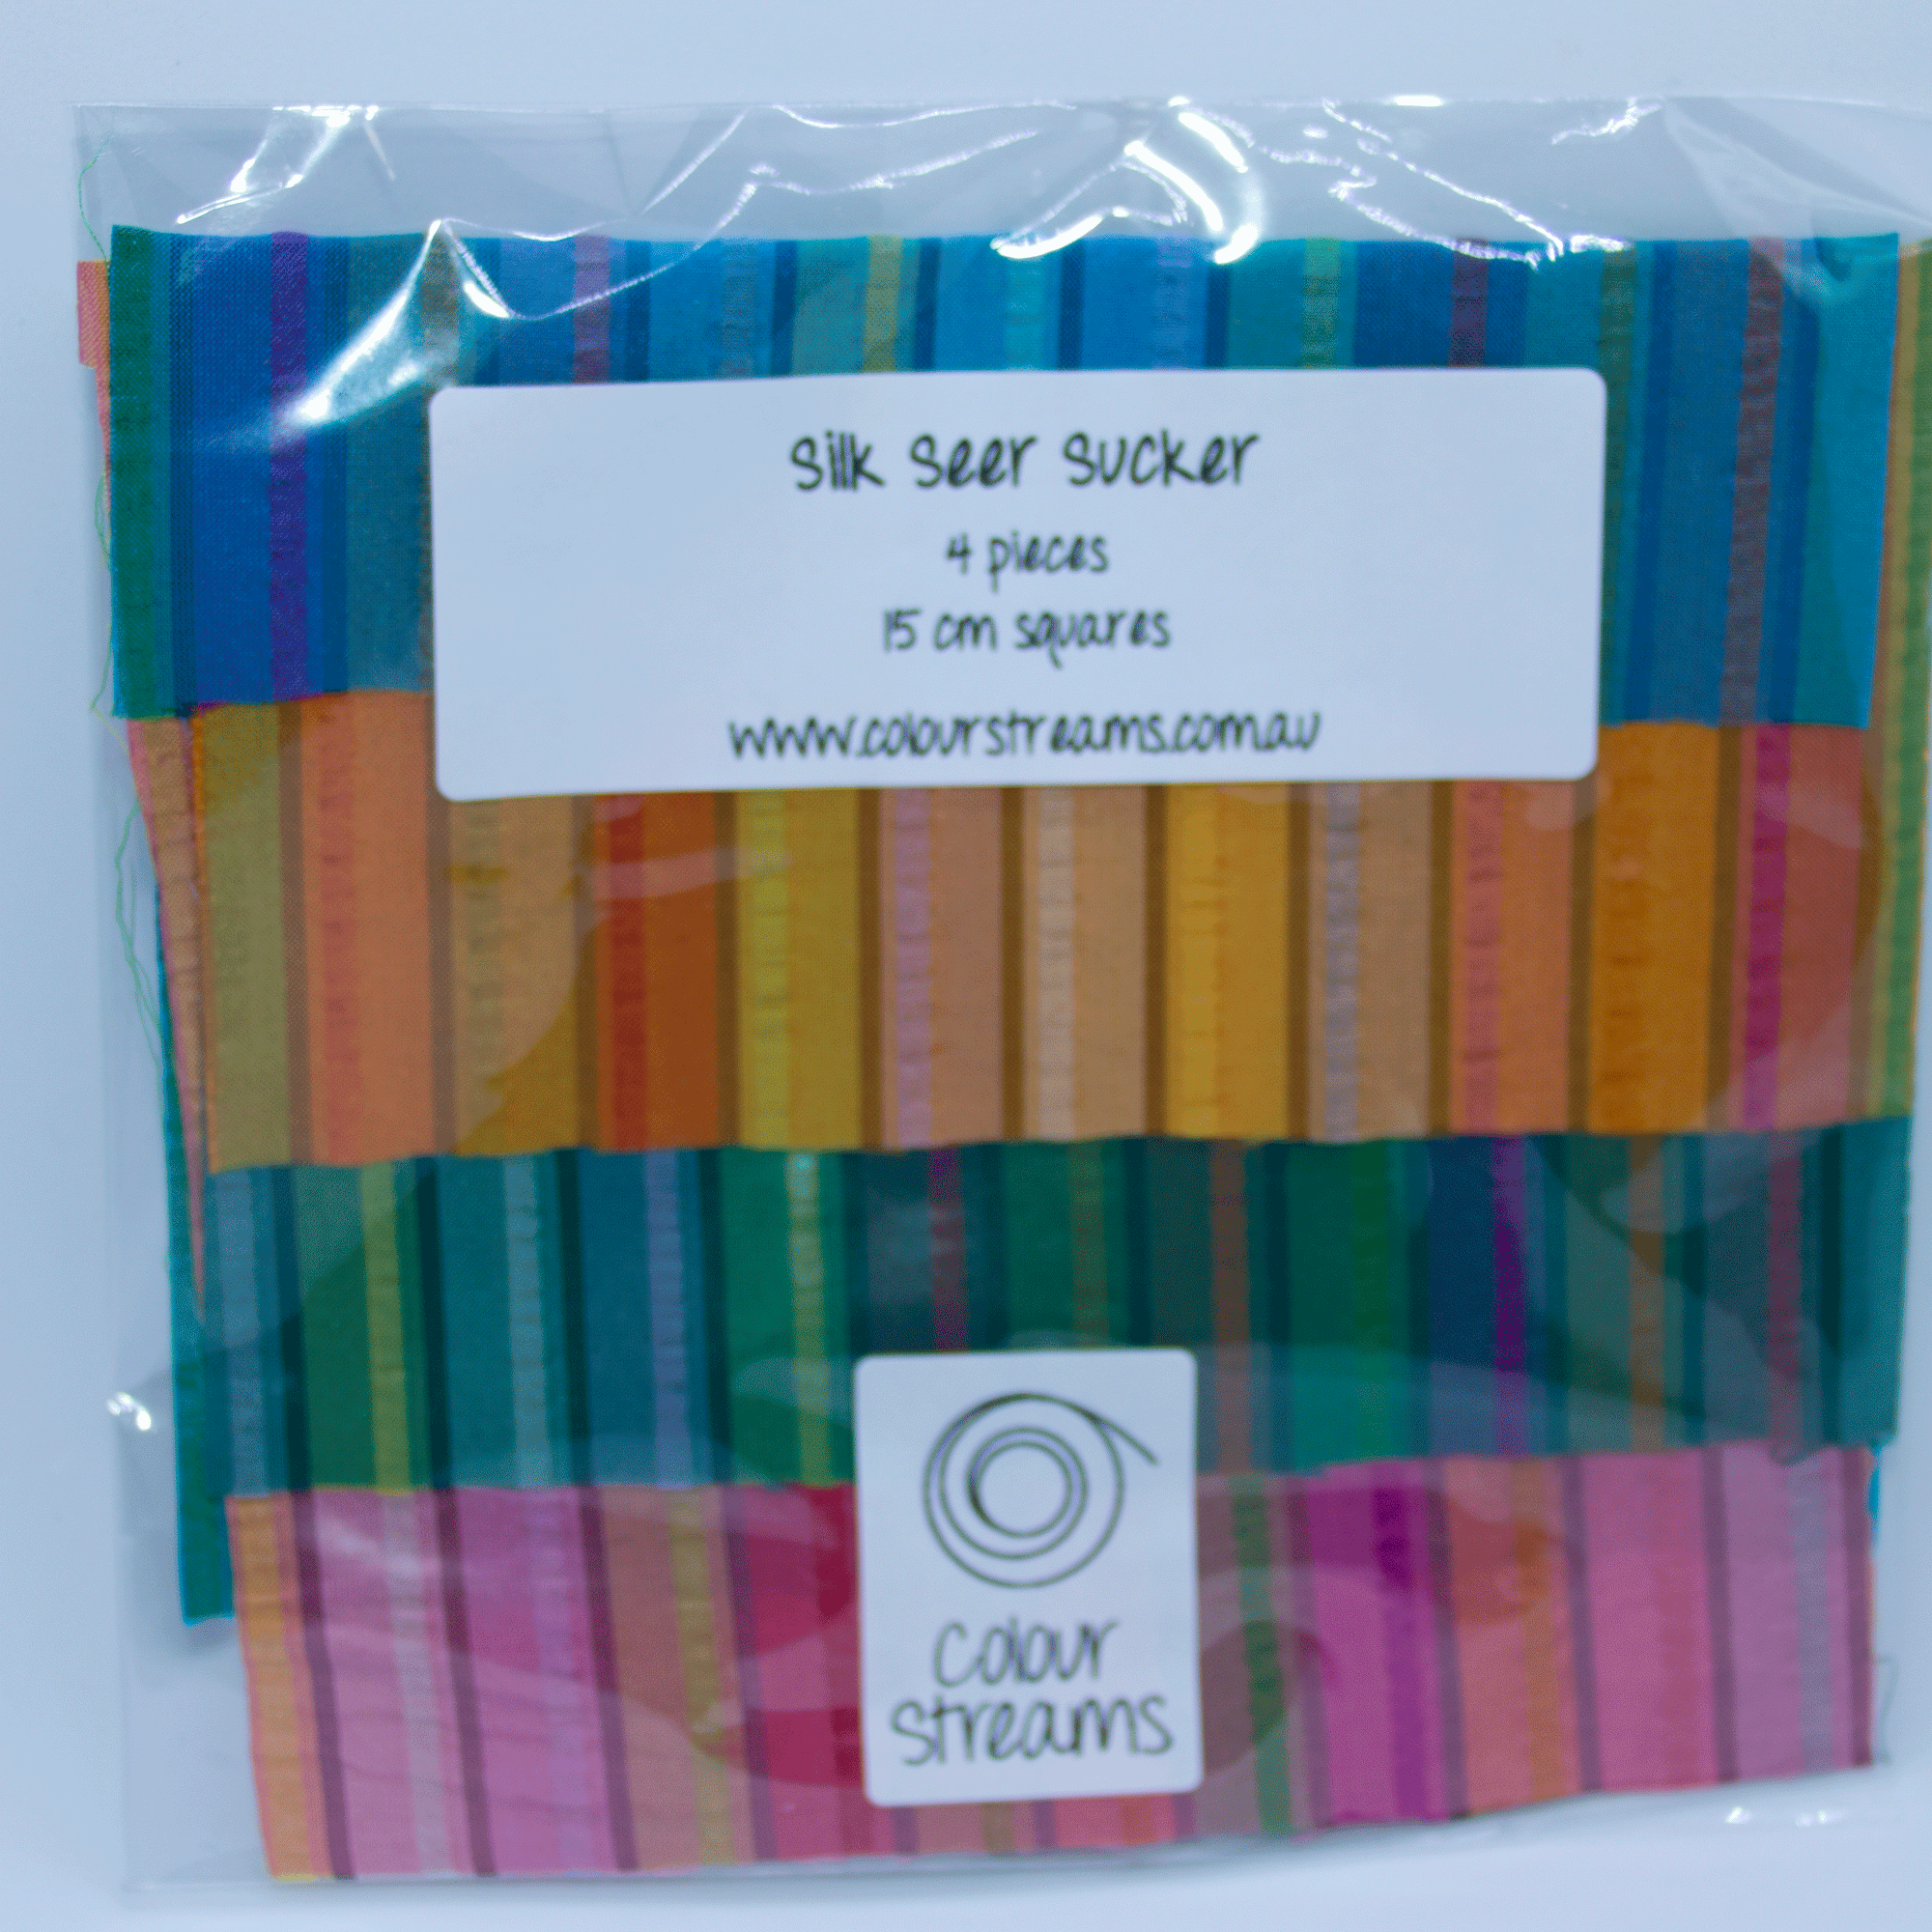 www.colourstreams.com.au Colour Streams Silk Seer Sucker Allsorts